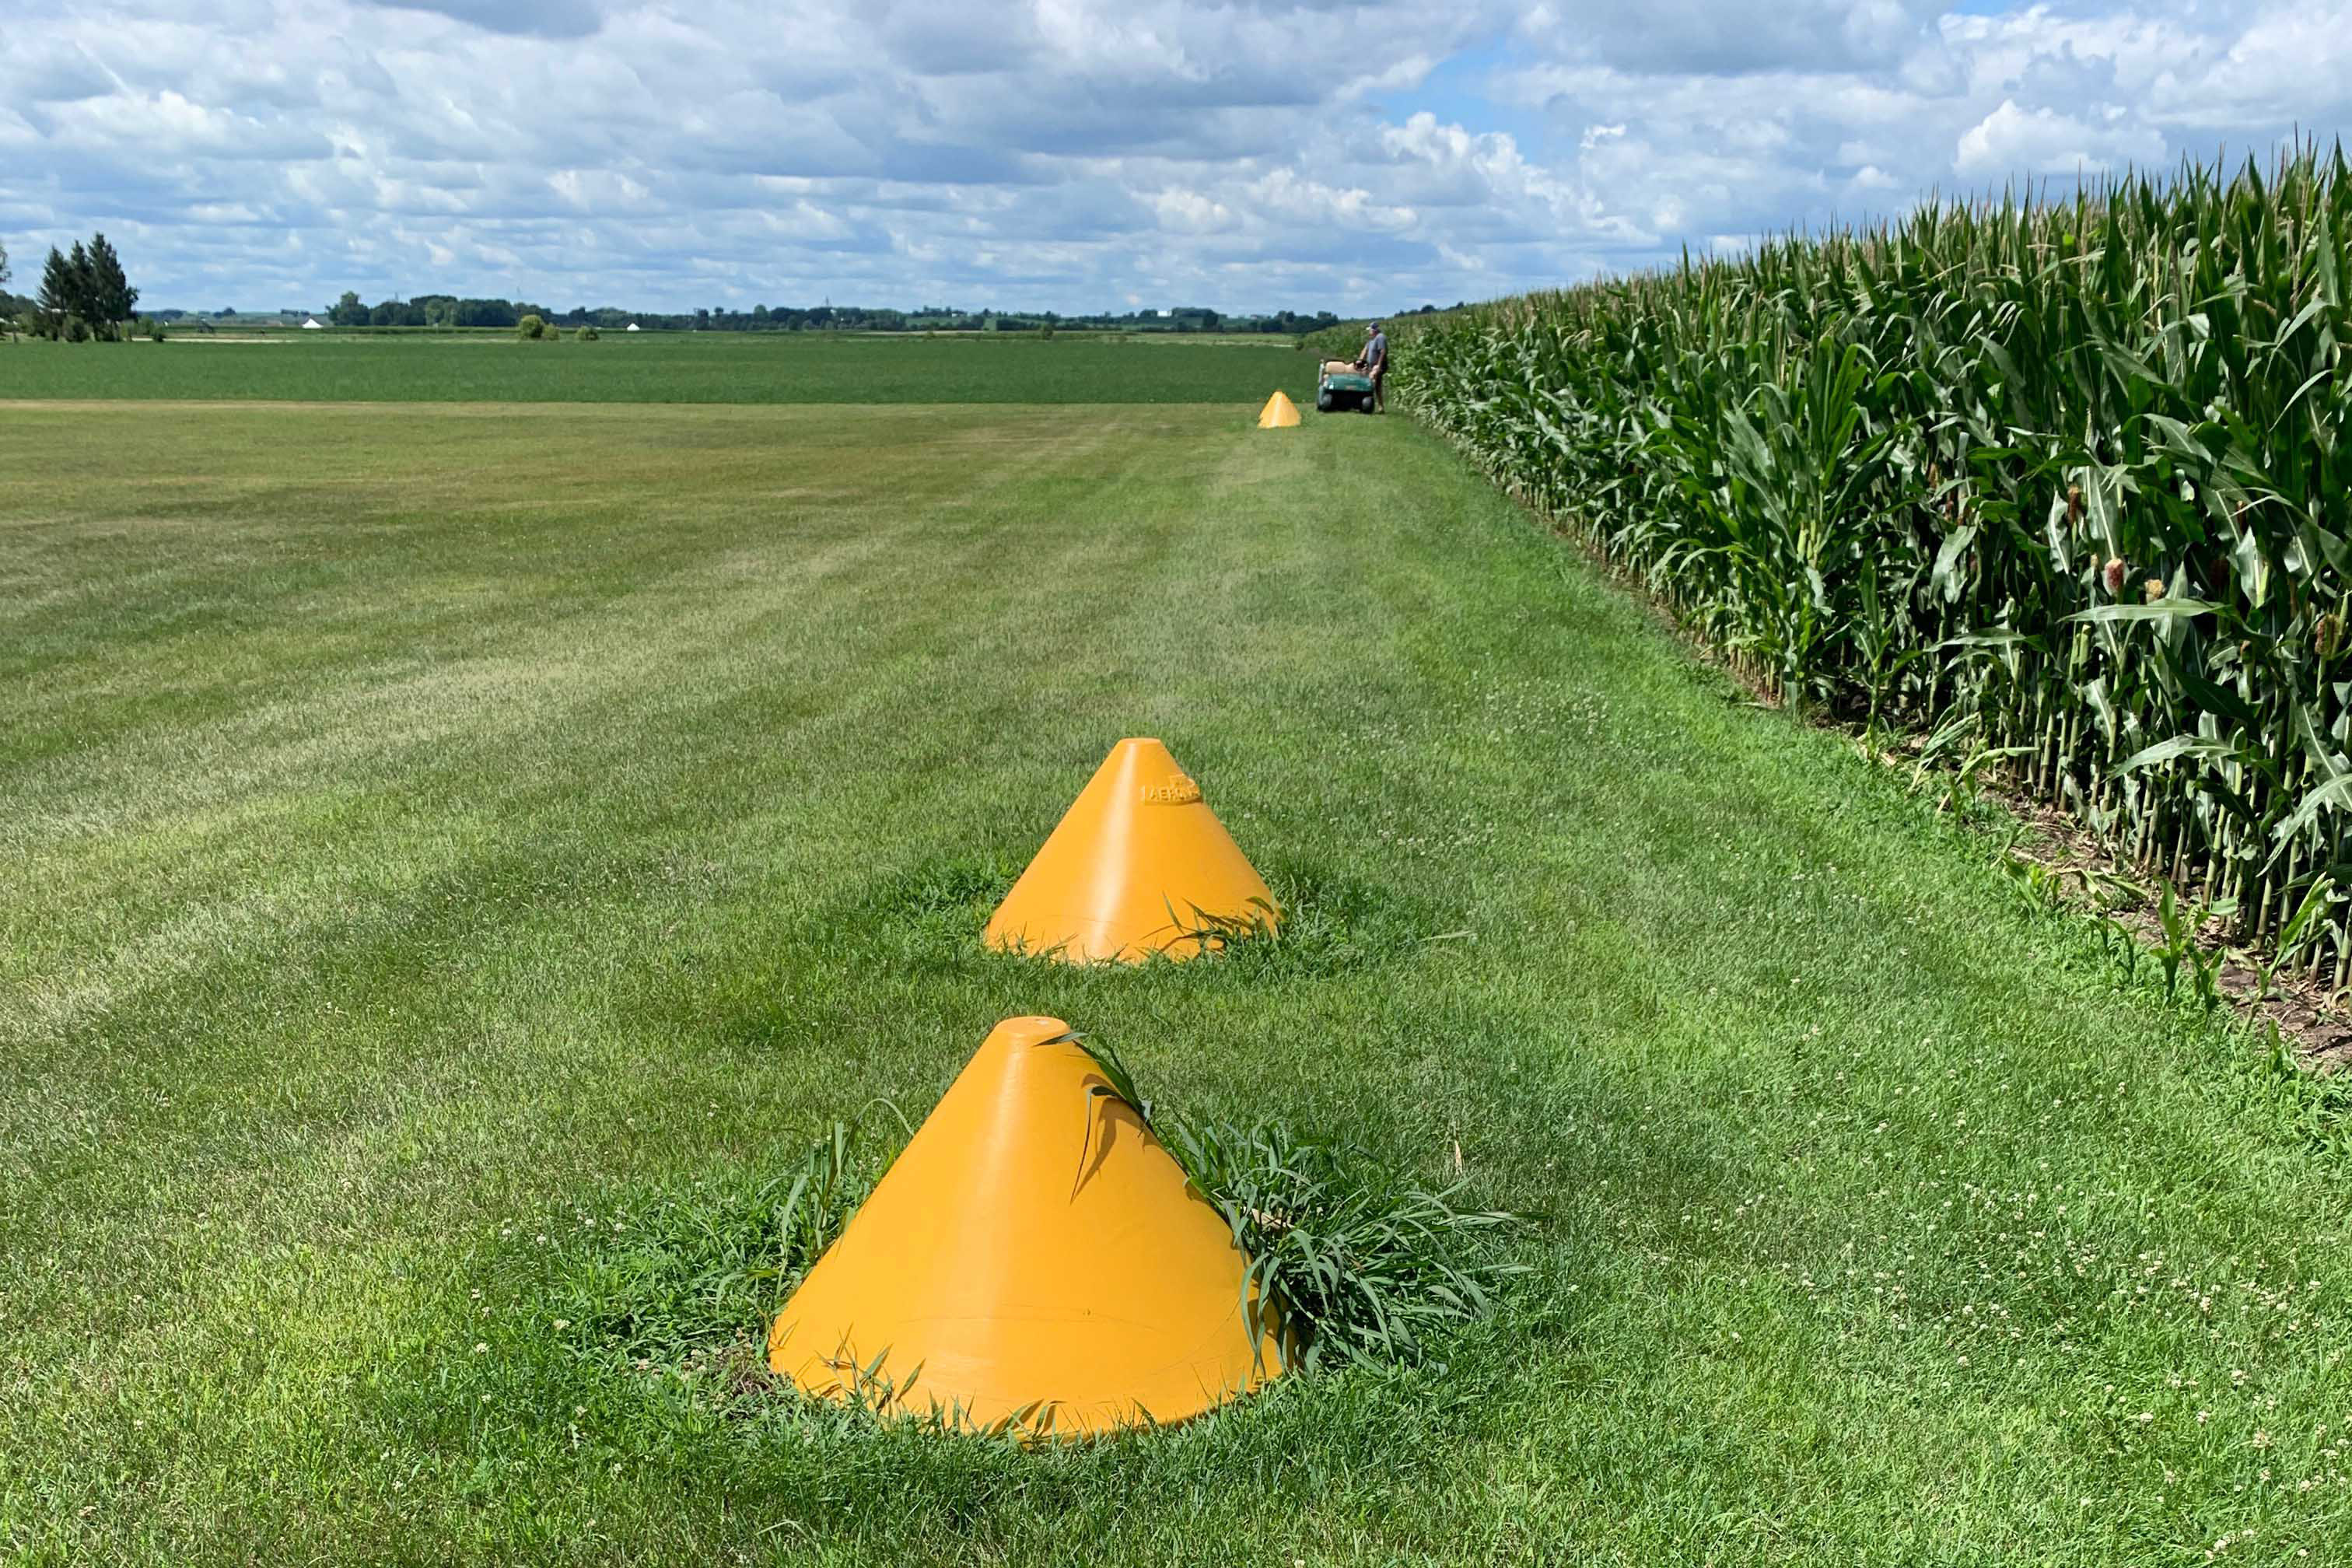 Corn planted near airport runway